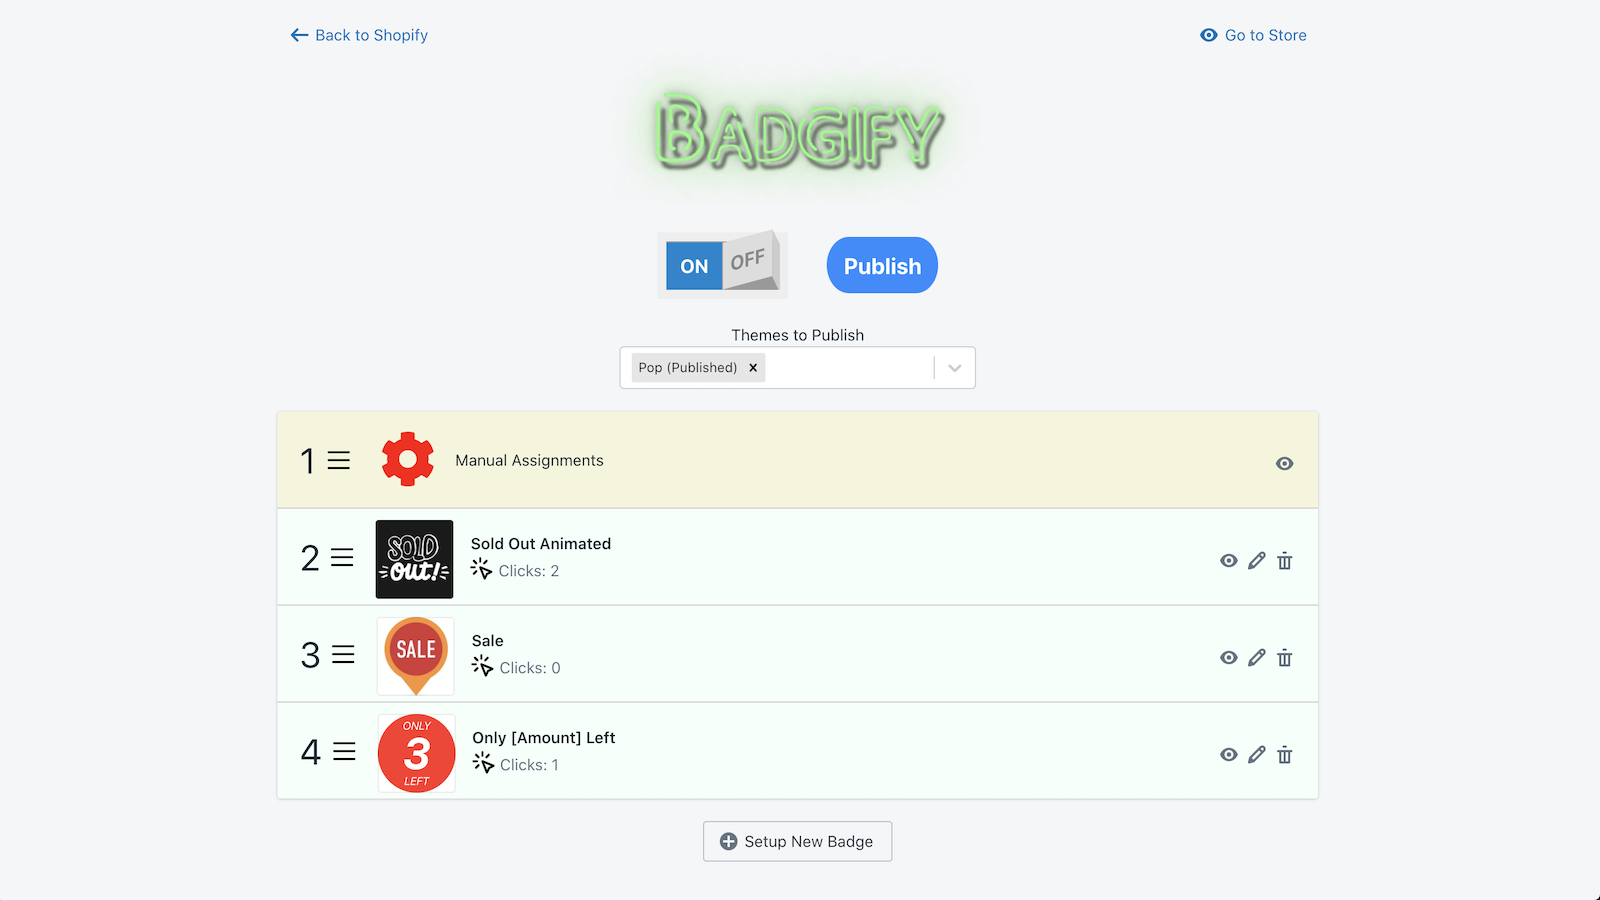 Badgify smart product badges